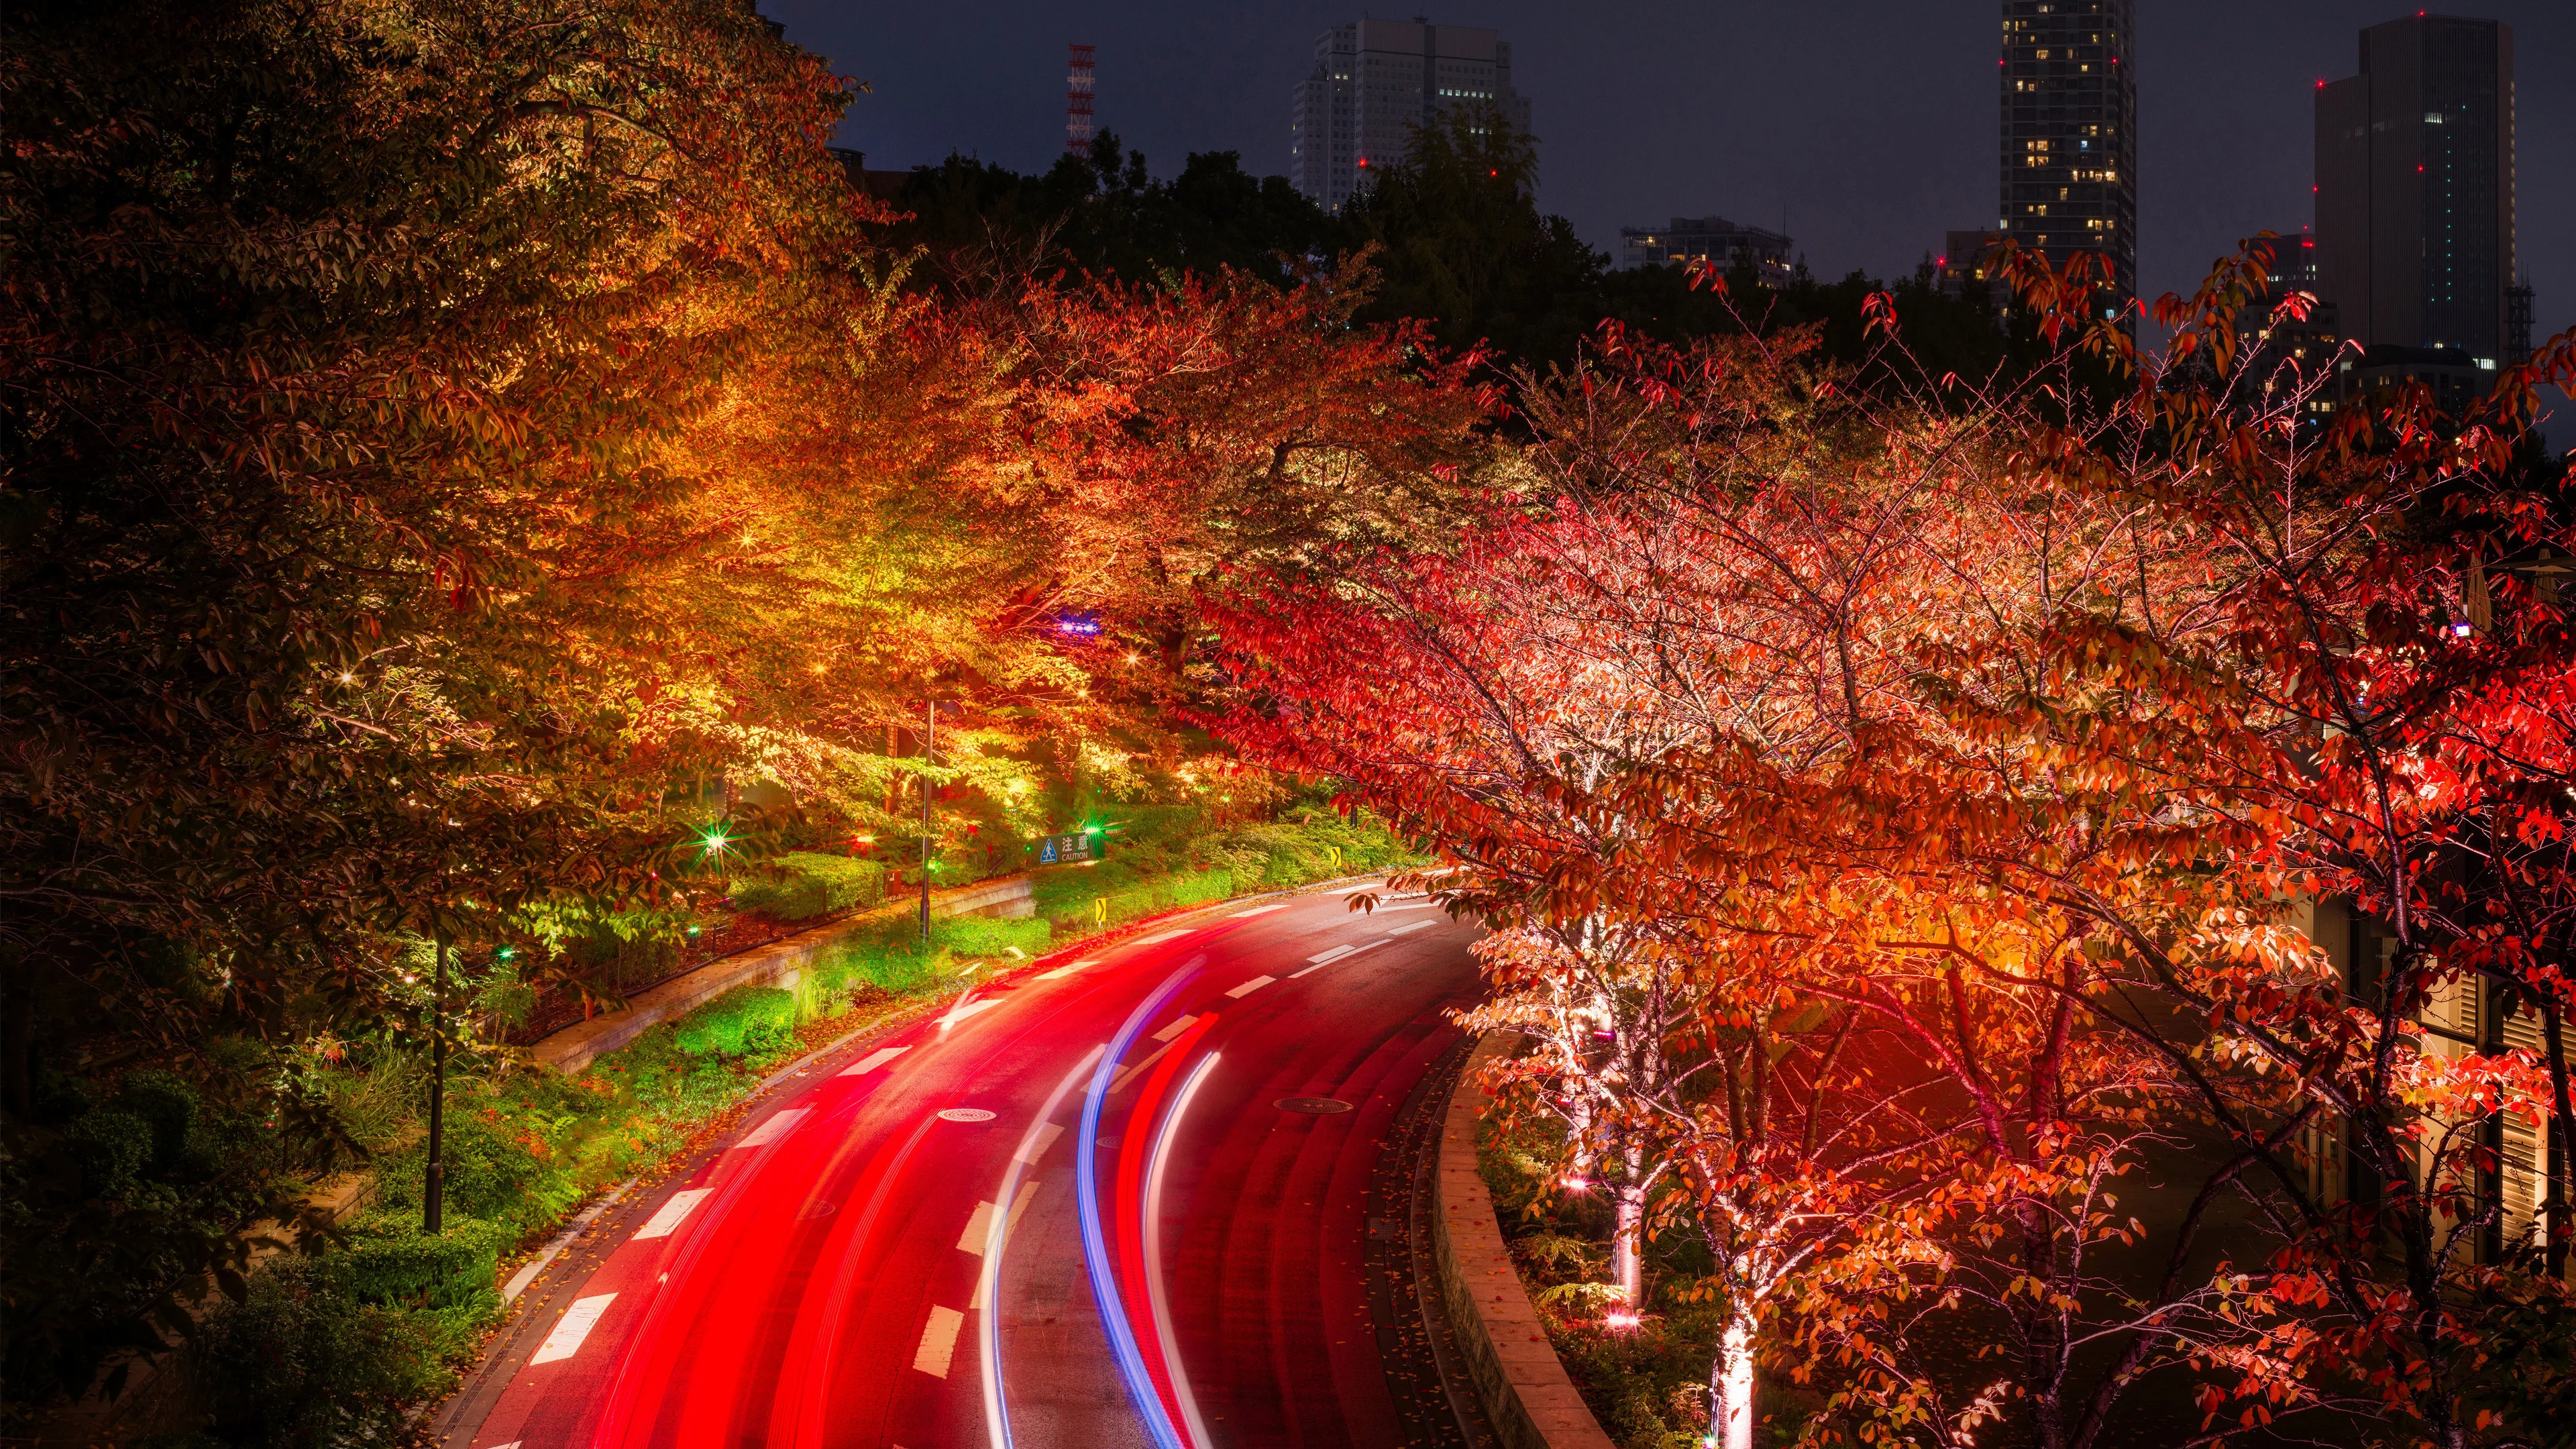 japan tokyo roads autumn trees night 4k 1540135740 - Japan Tokyo Roads Autumn Trees Night 4k - trees wallpapers, tokyo wallpapers, road wallpapers, night wallpapers, nature wallpapers, japan wallpapers, hd-wallpapers, autumn wallpapers, 5k wallpapers, 4k-wallpapers